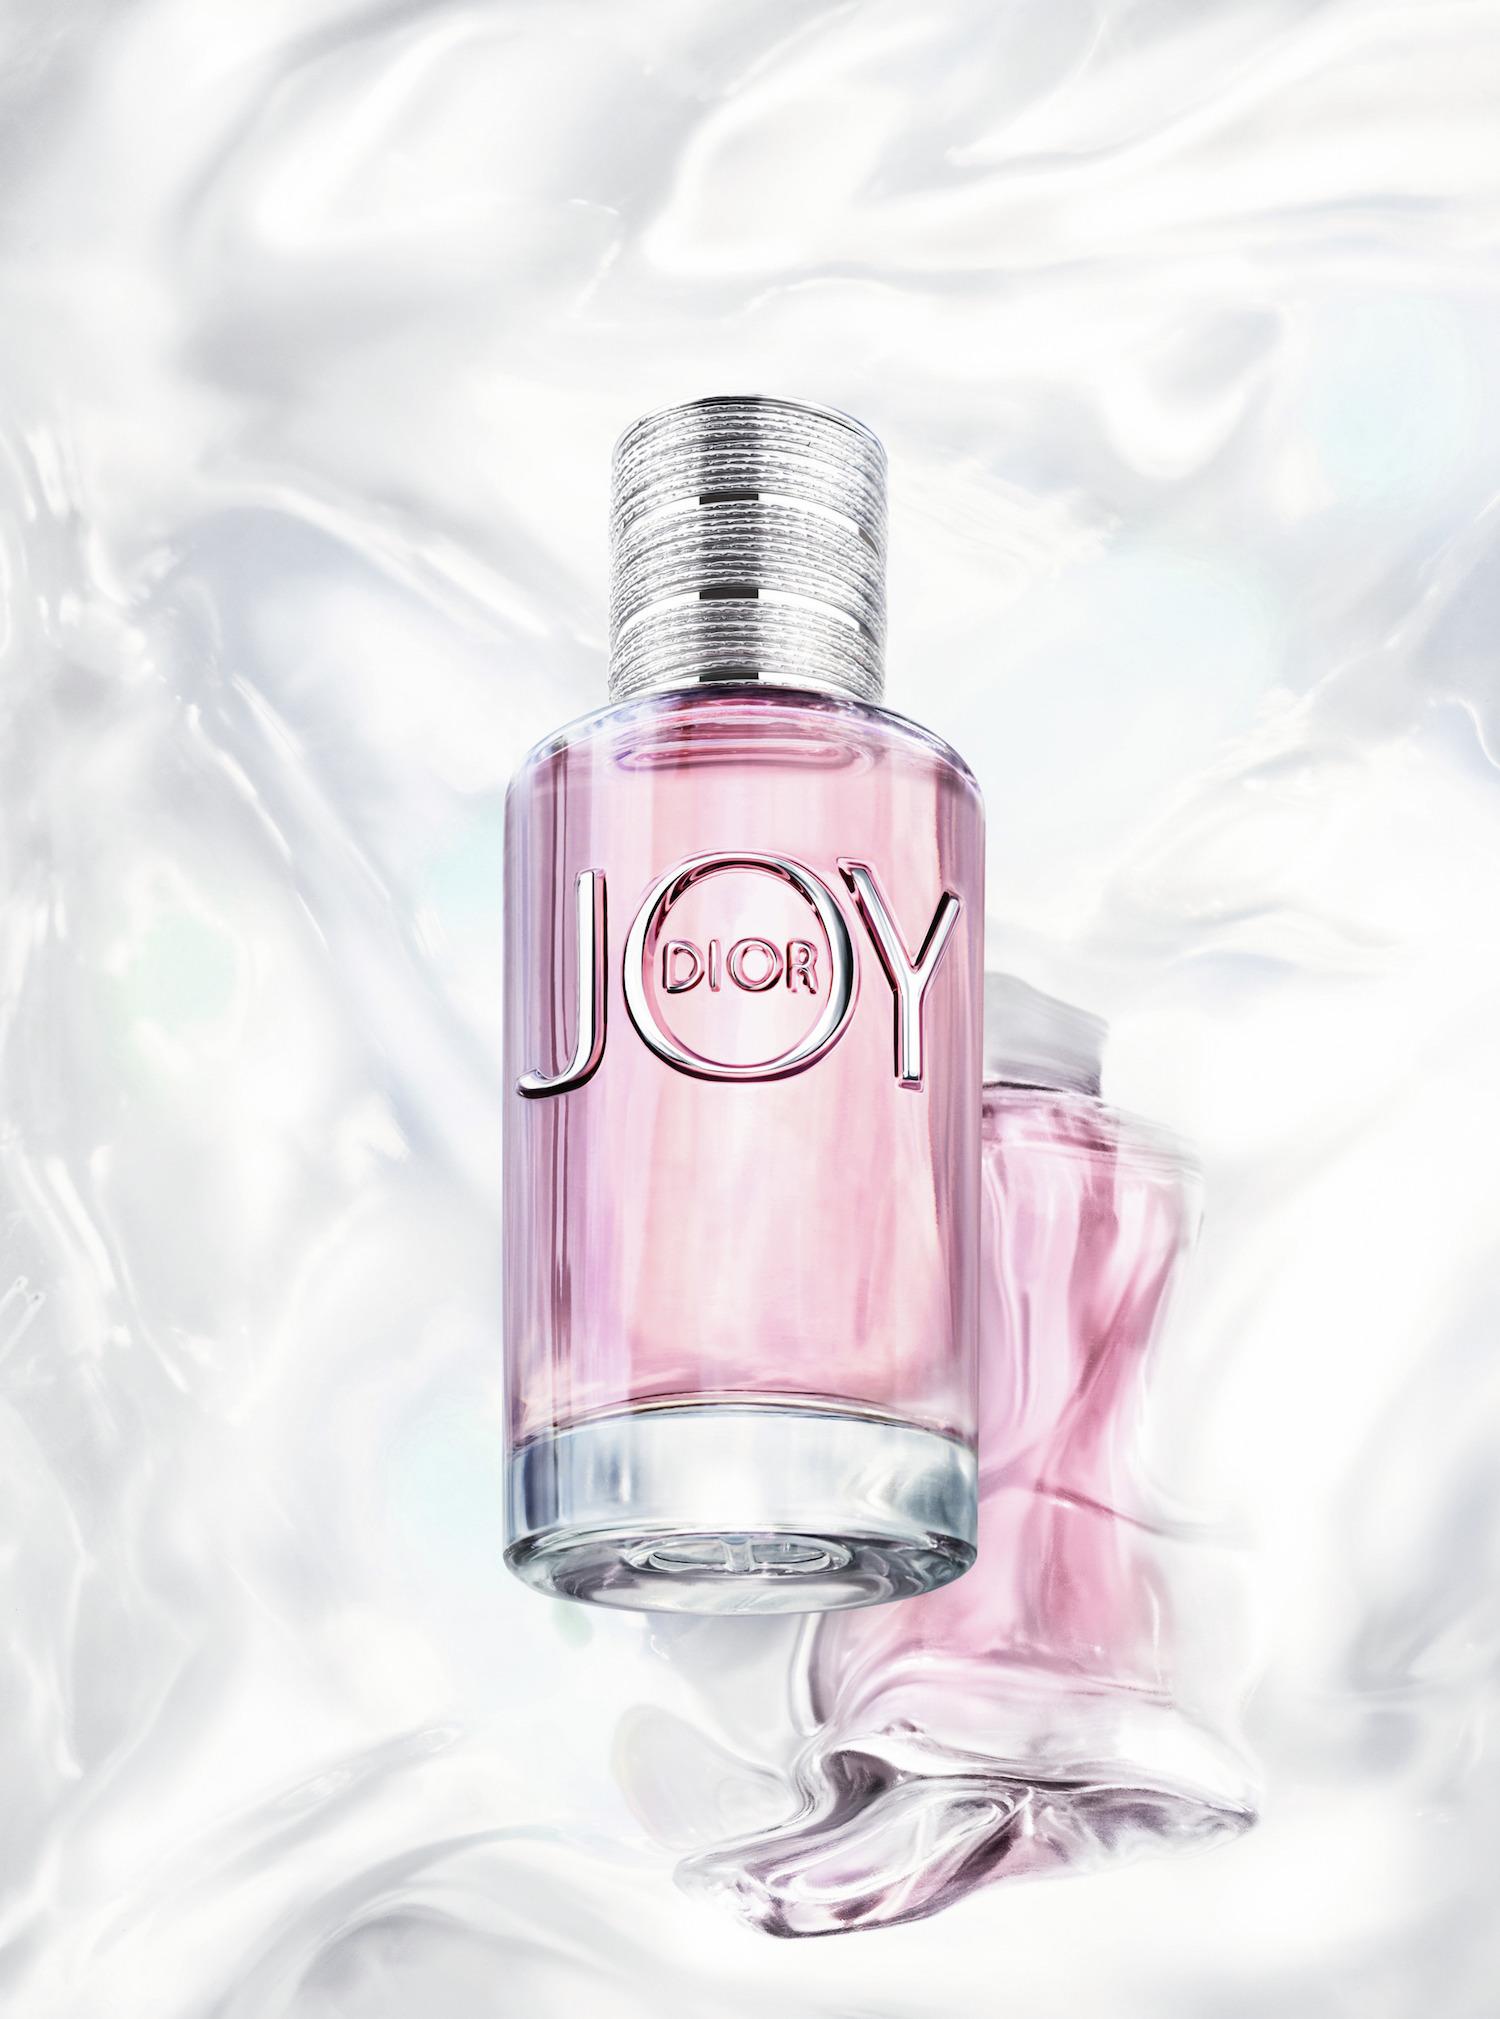 joy by dior beautyfullblog